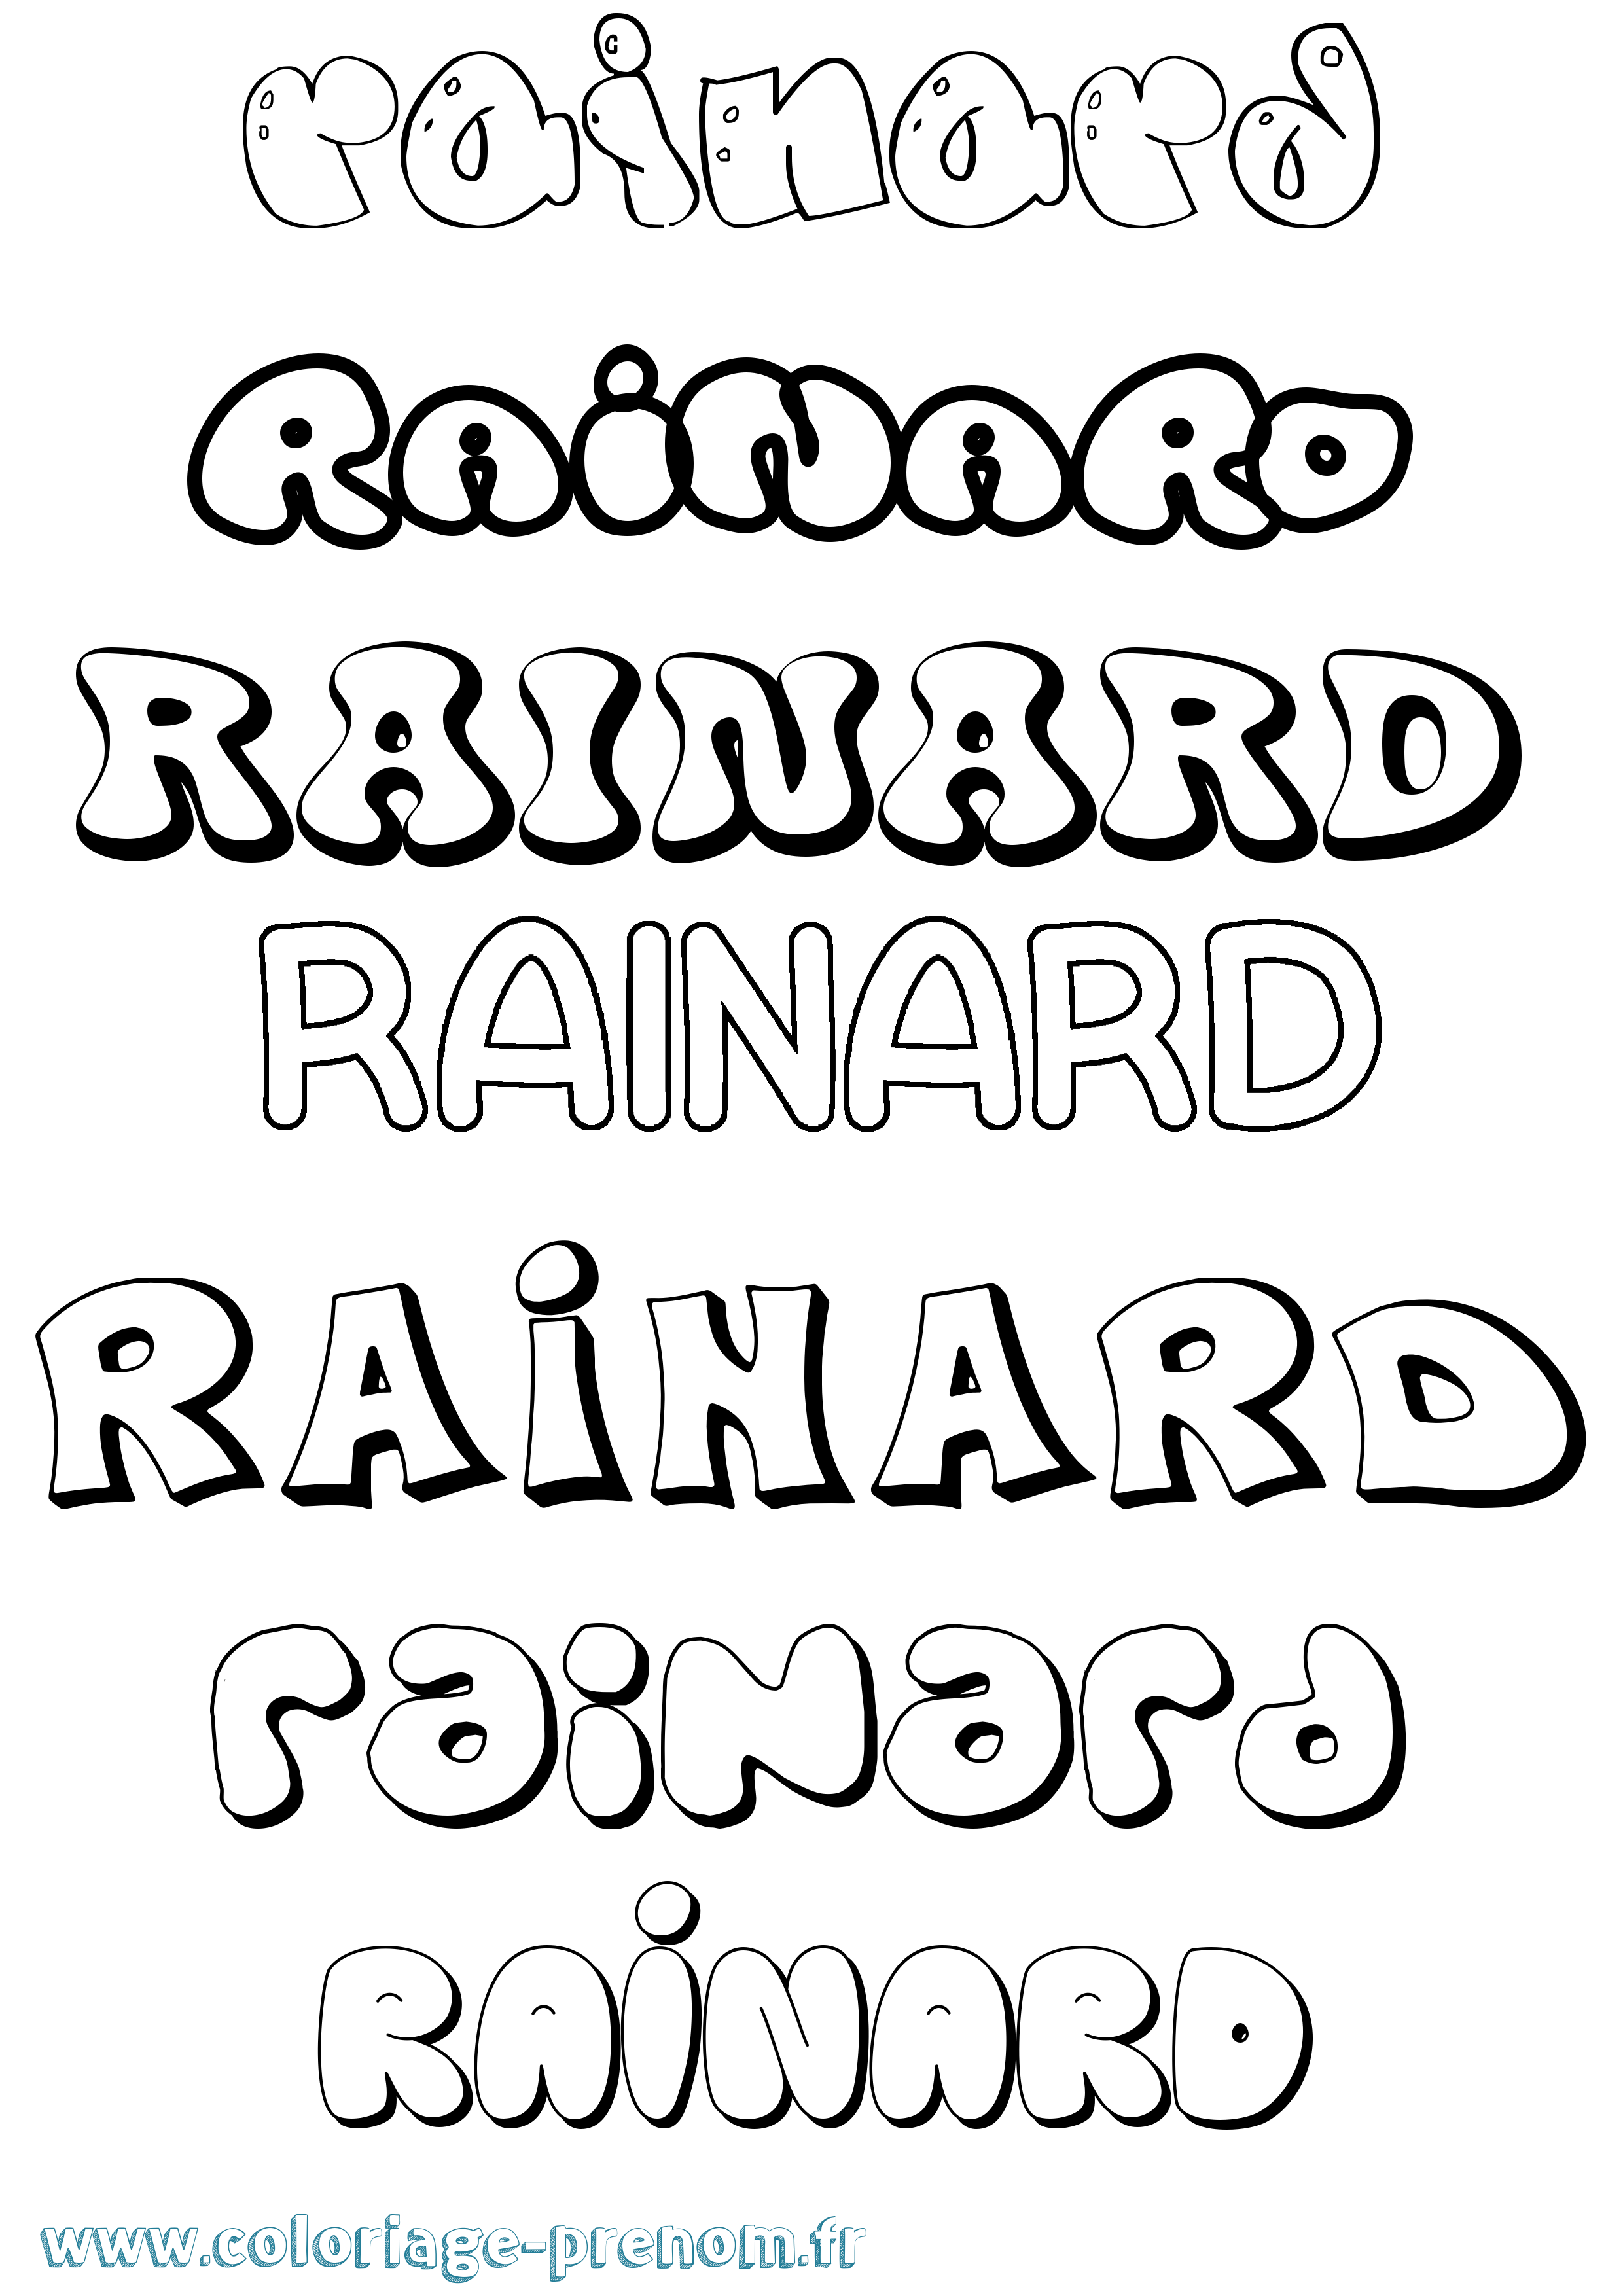 Coloriage prénom Rainard Bubble